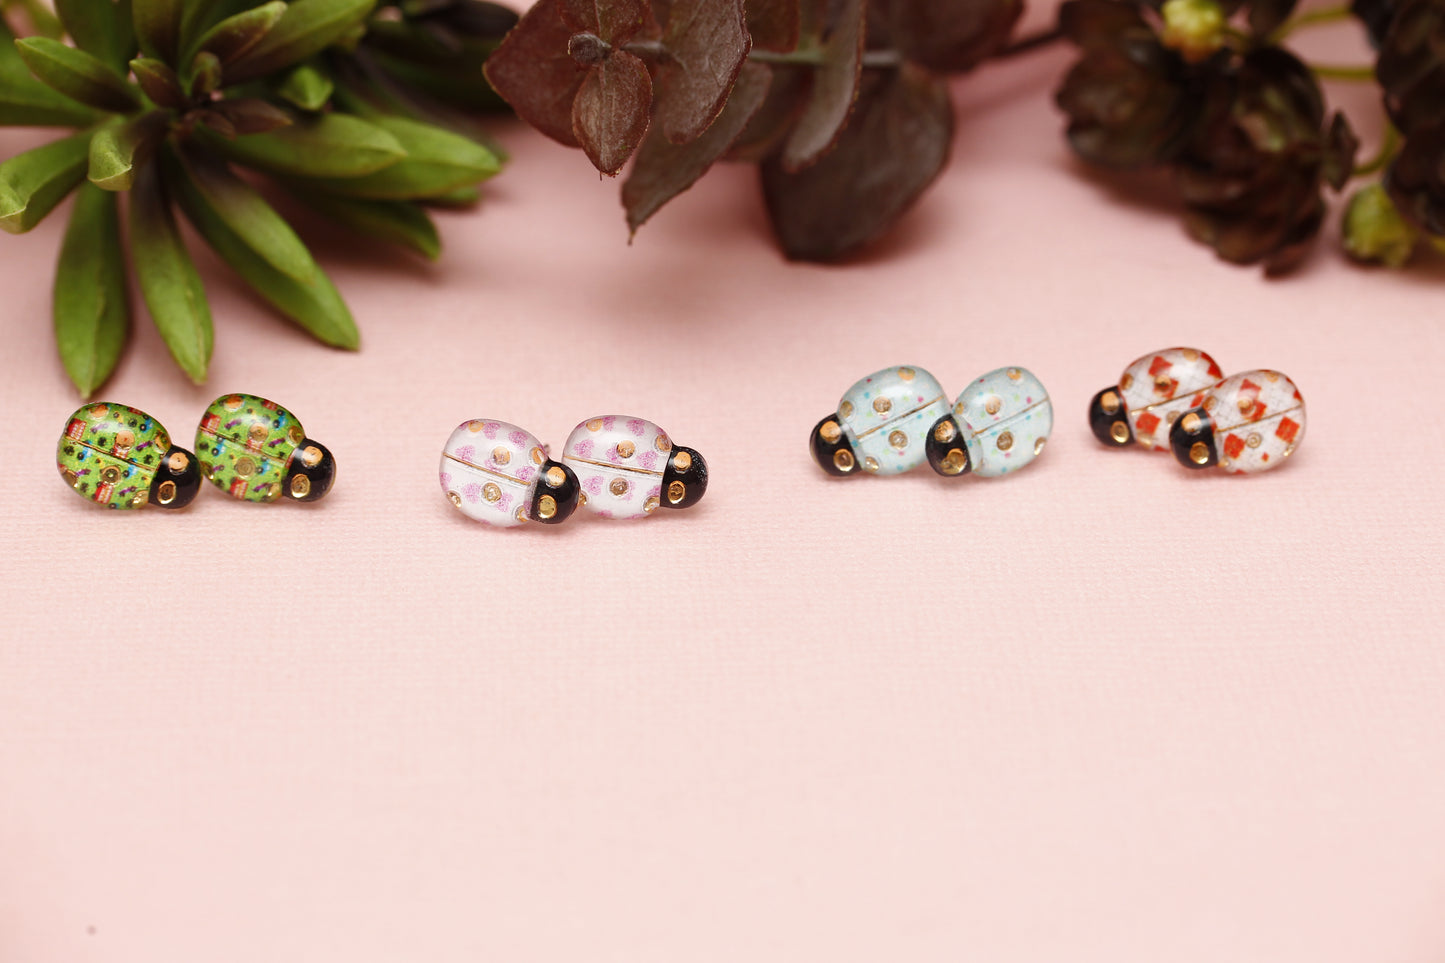 Adopt a Mystery Ladybug - Stud Earrings